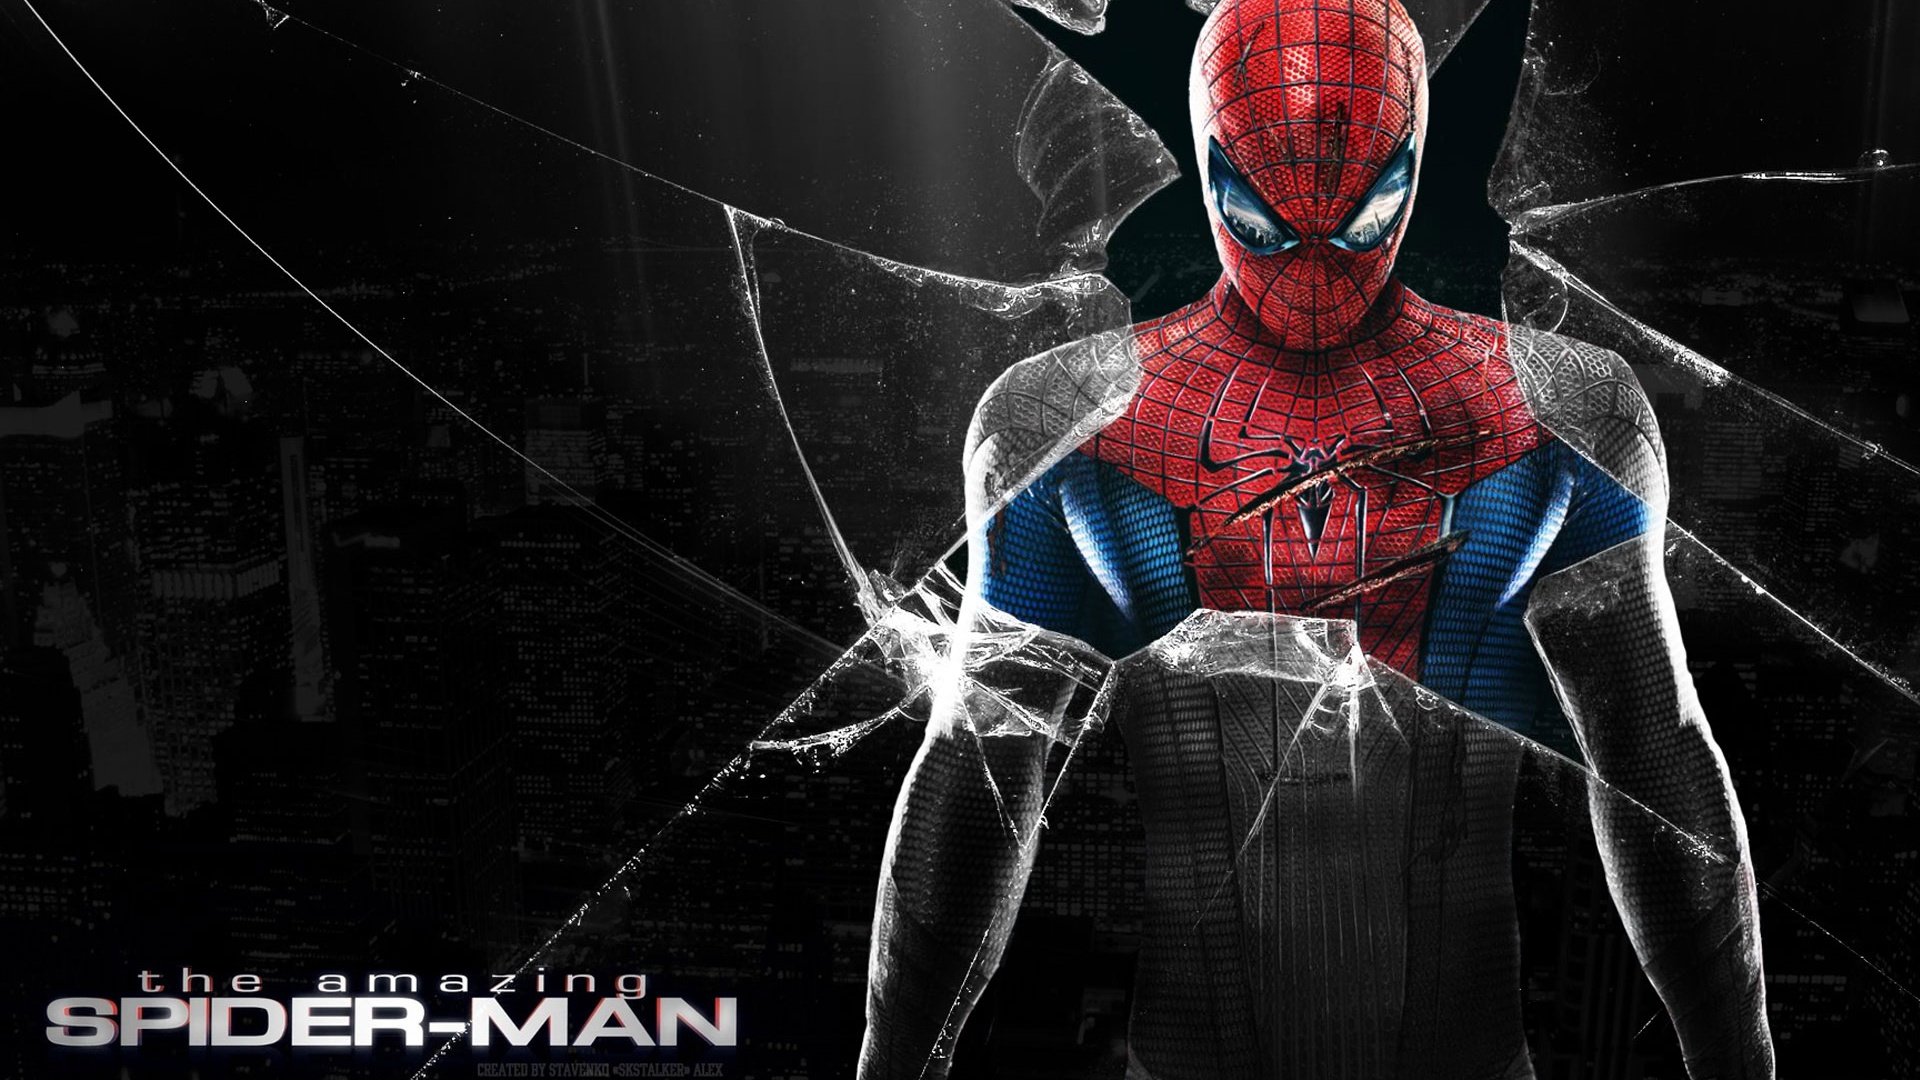 Spider man, 2, Action, Adventure, Fantasy, Comics, Movie, Spider, Spiderman, Marv...